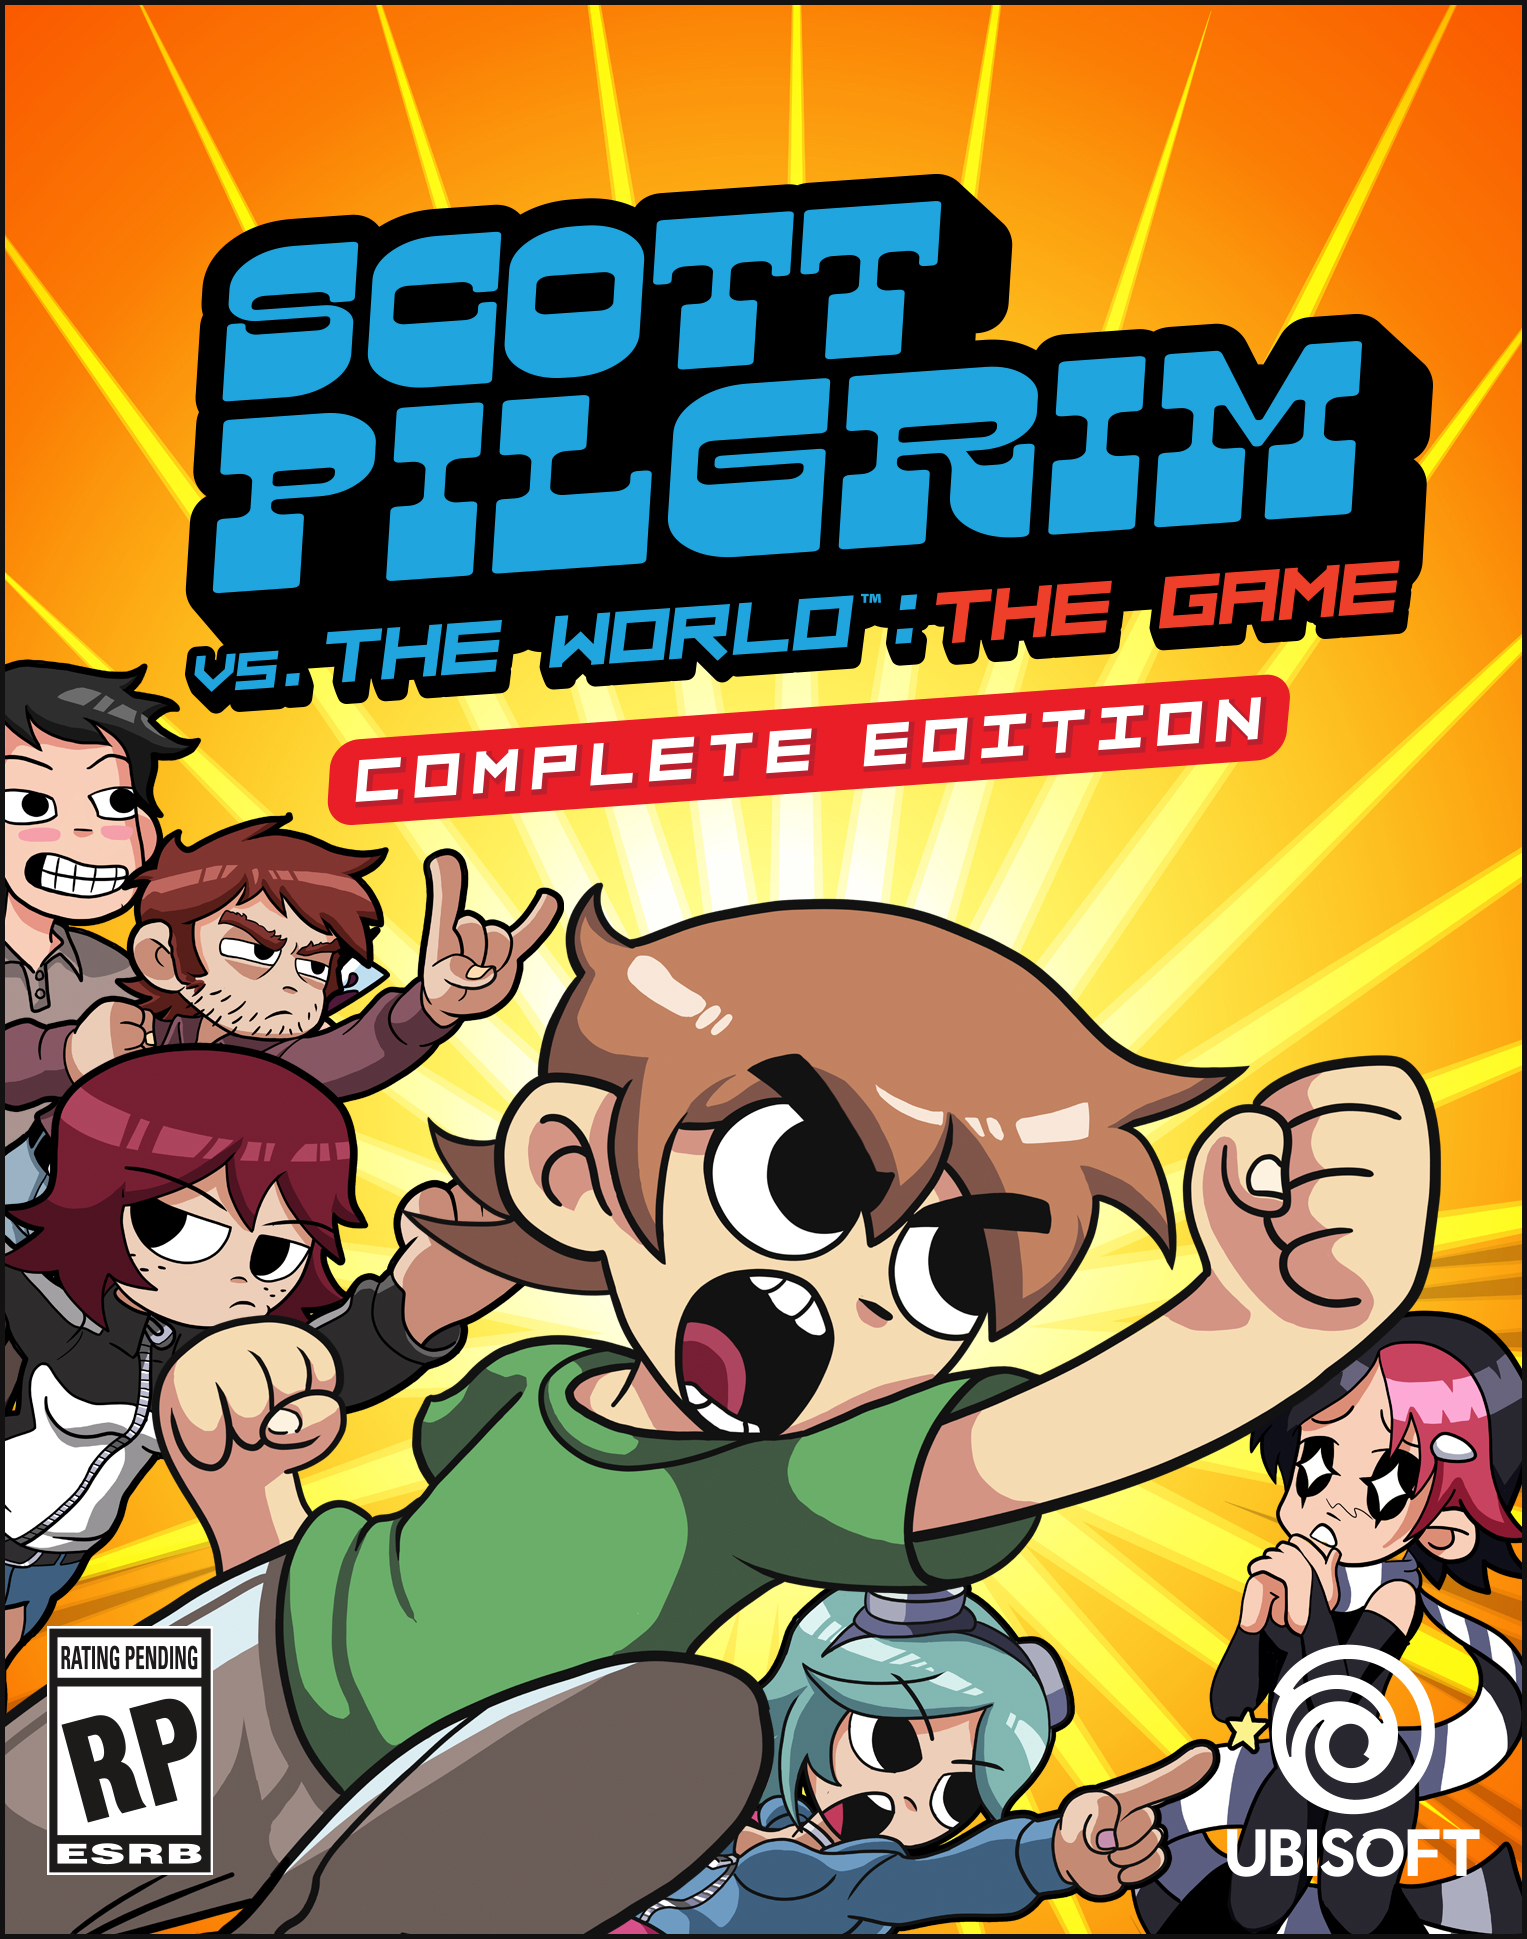 Scott Pilgrim vs. The World: Complete Edition